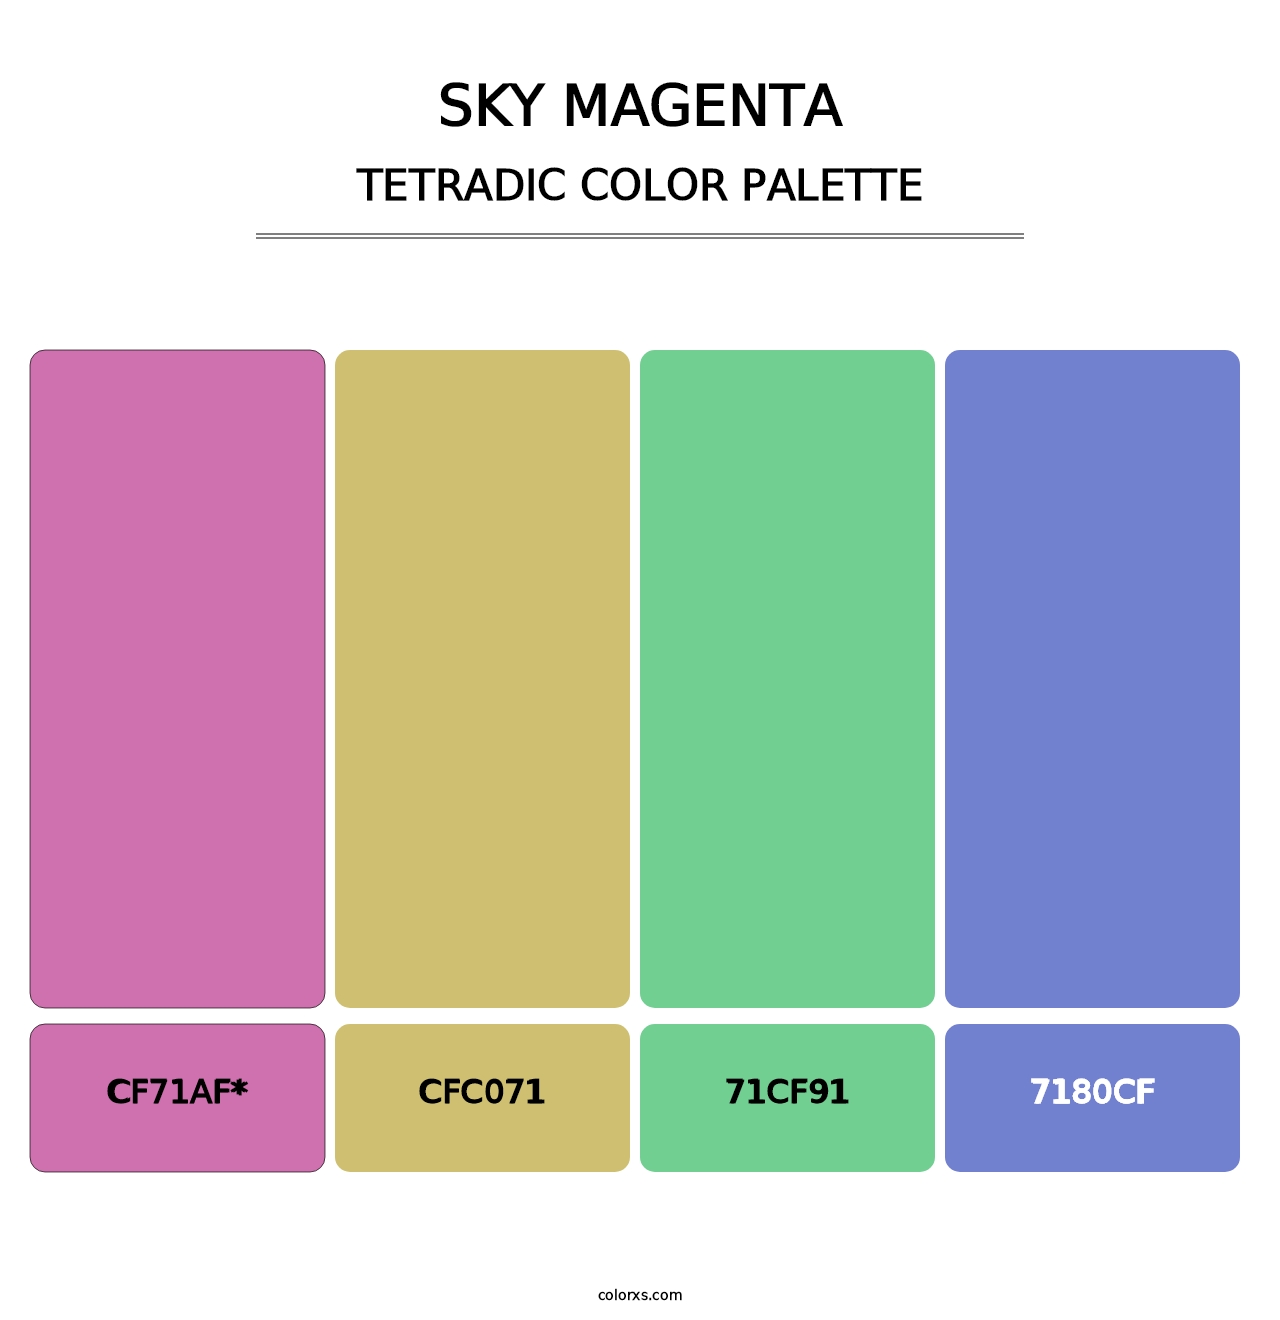 Sky Magenta - Tetradic Color Palette